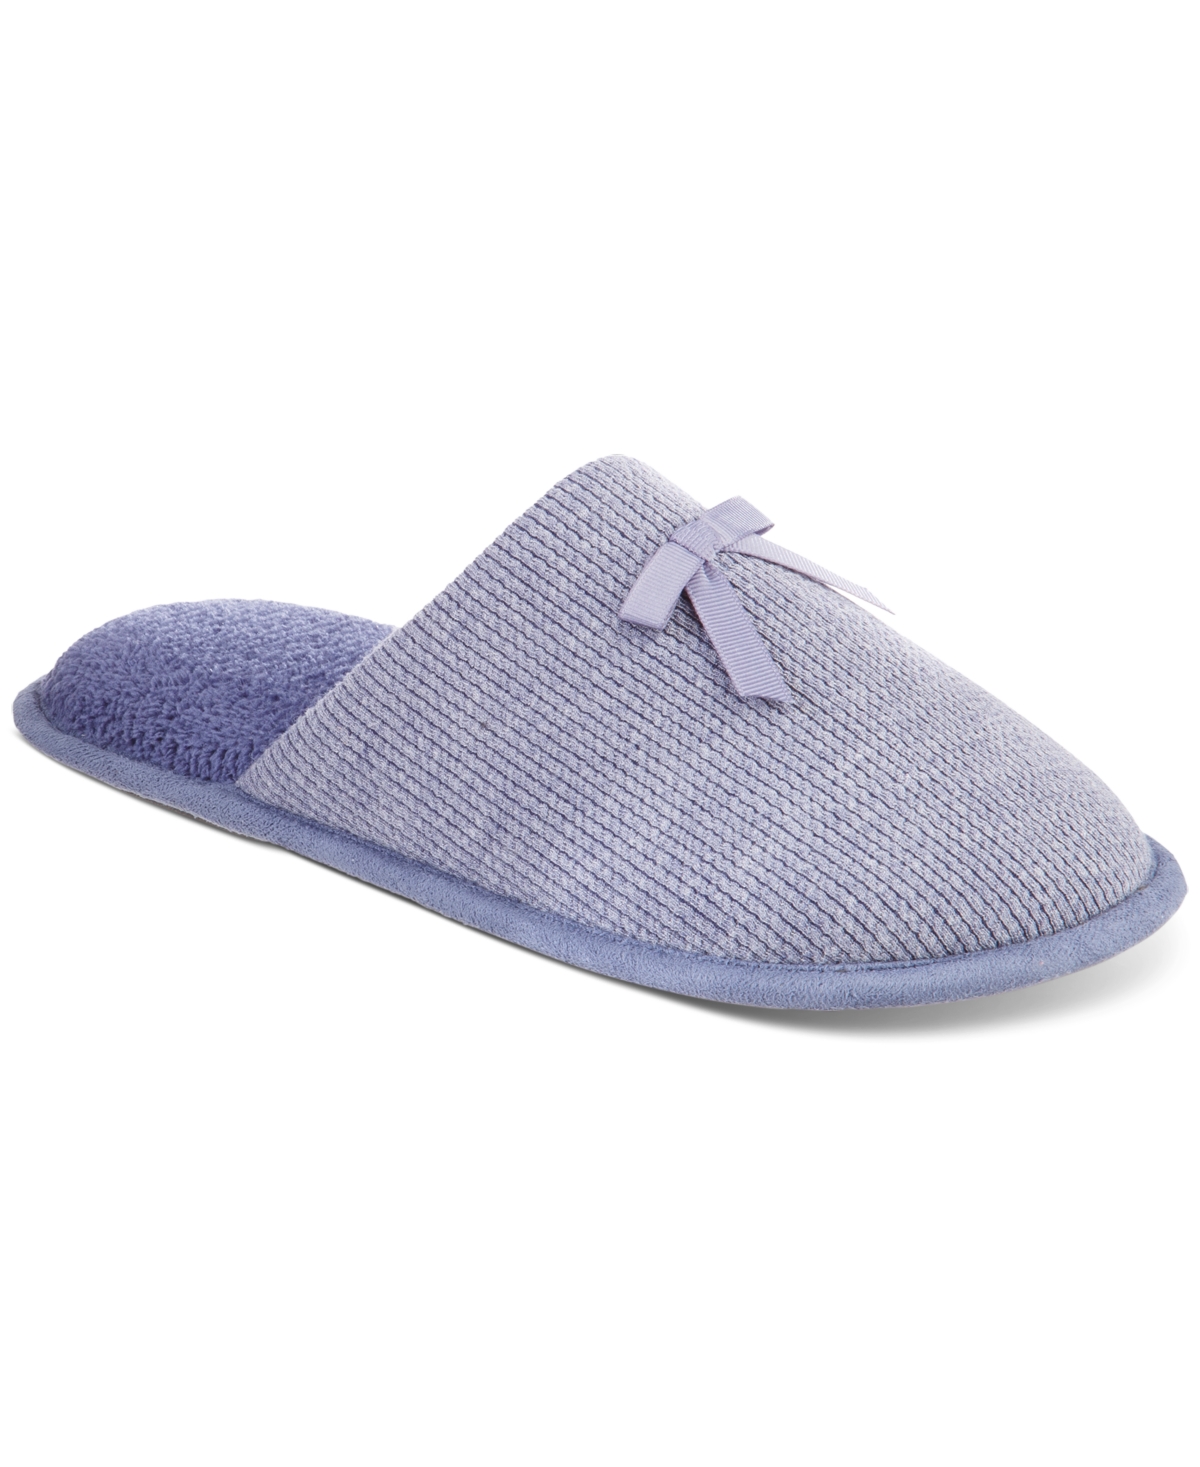 Women's Waffle-Knit Clog Slippers - Blue